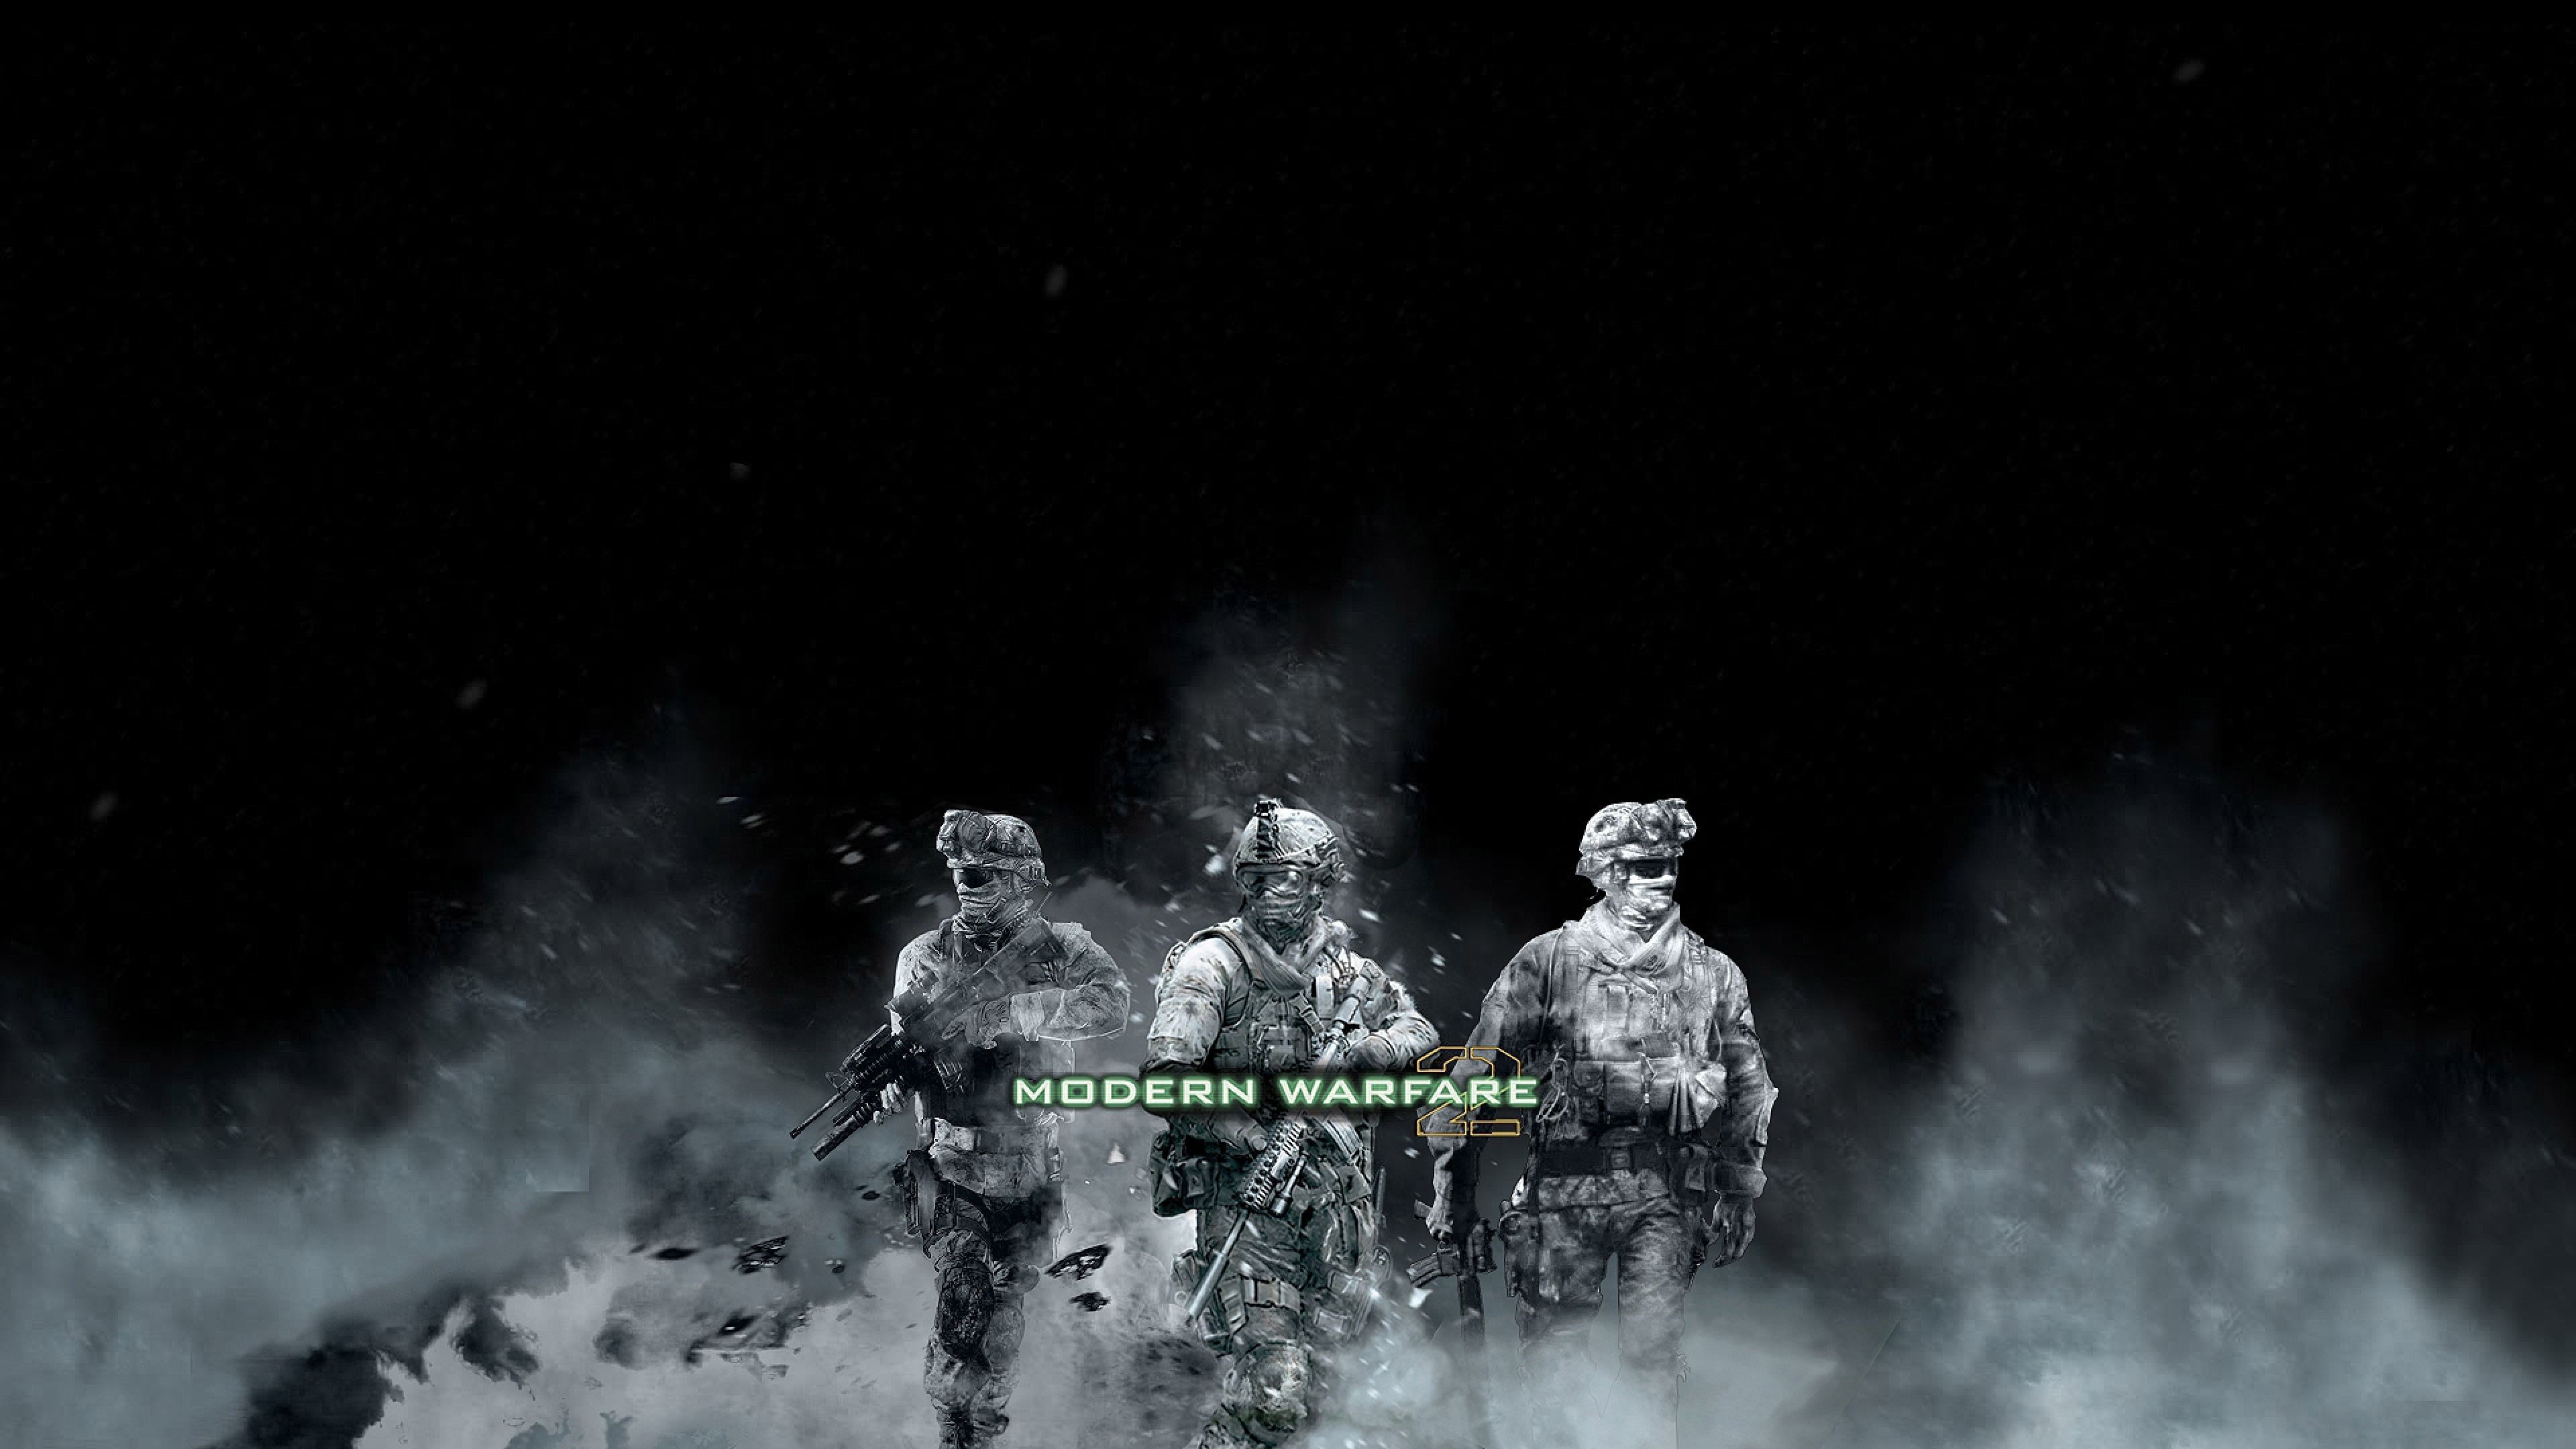 Download Wallpaper 3840x2160 Call of duty modern warfare 2 ...